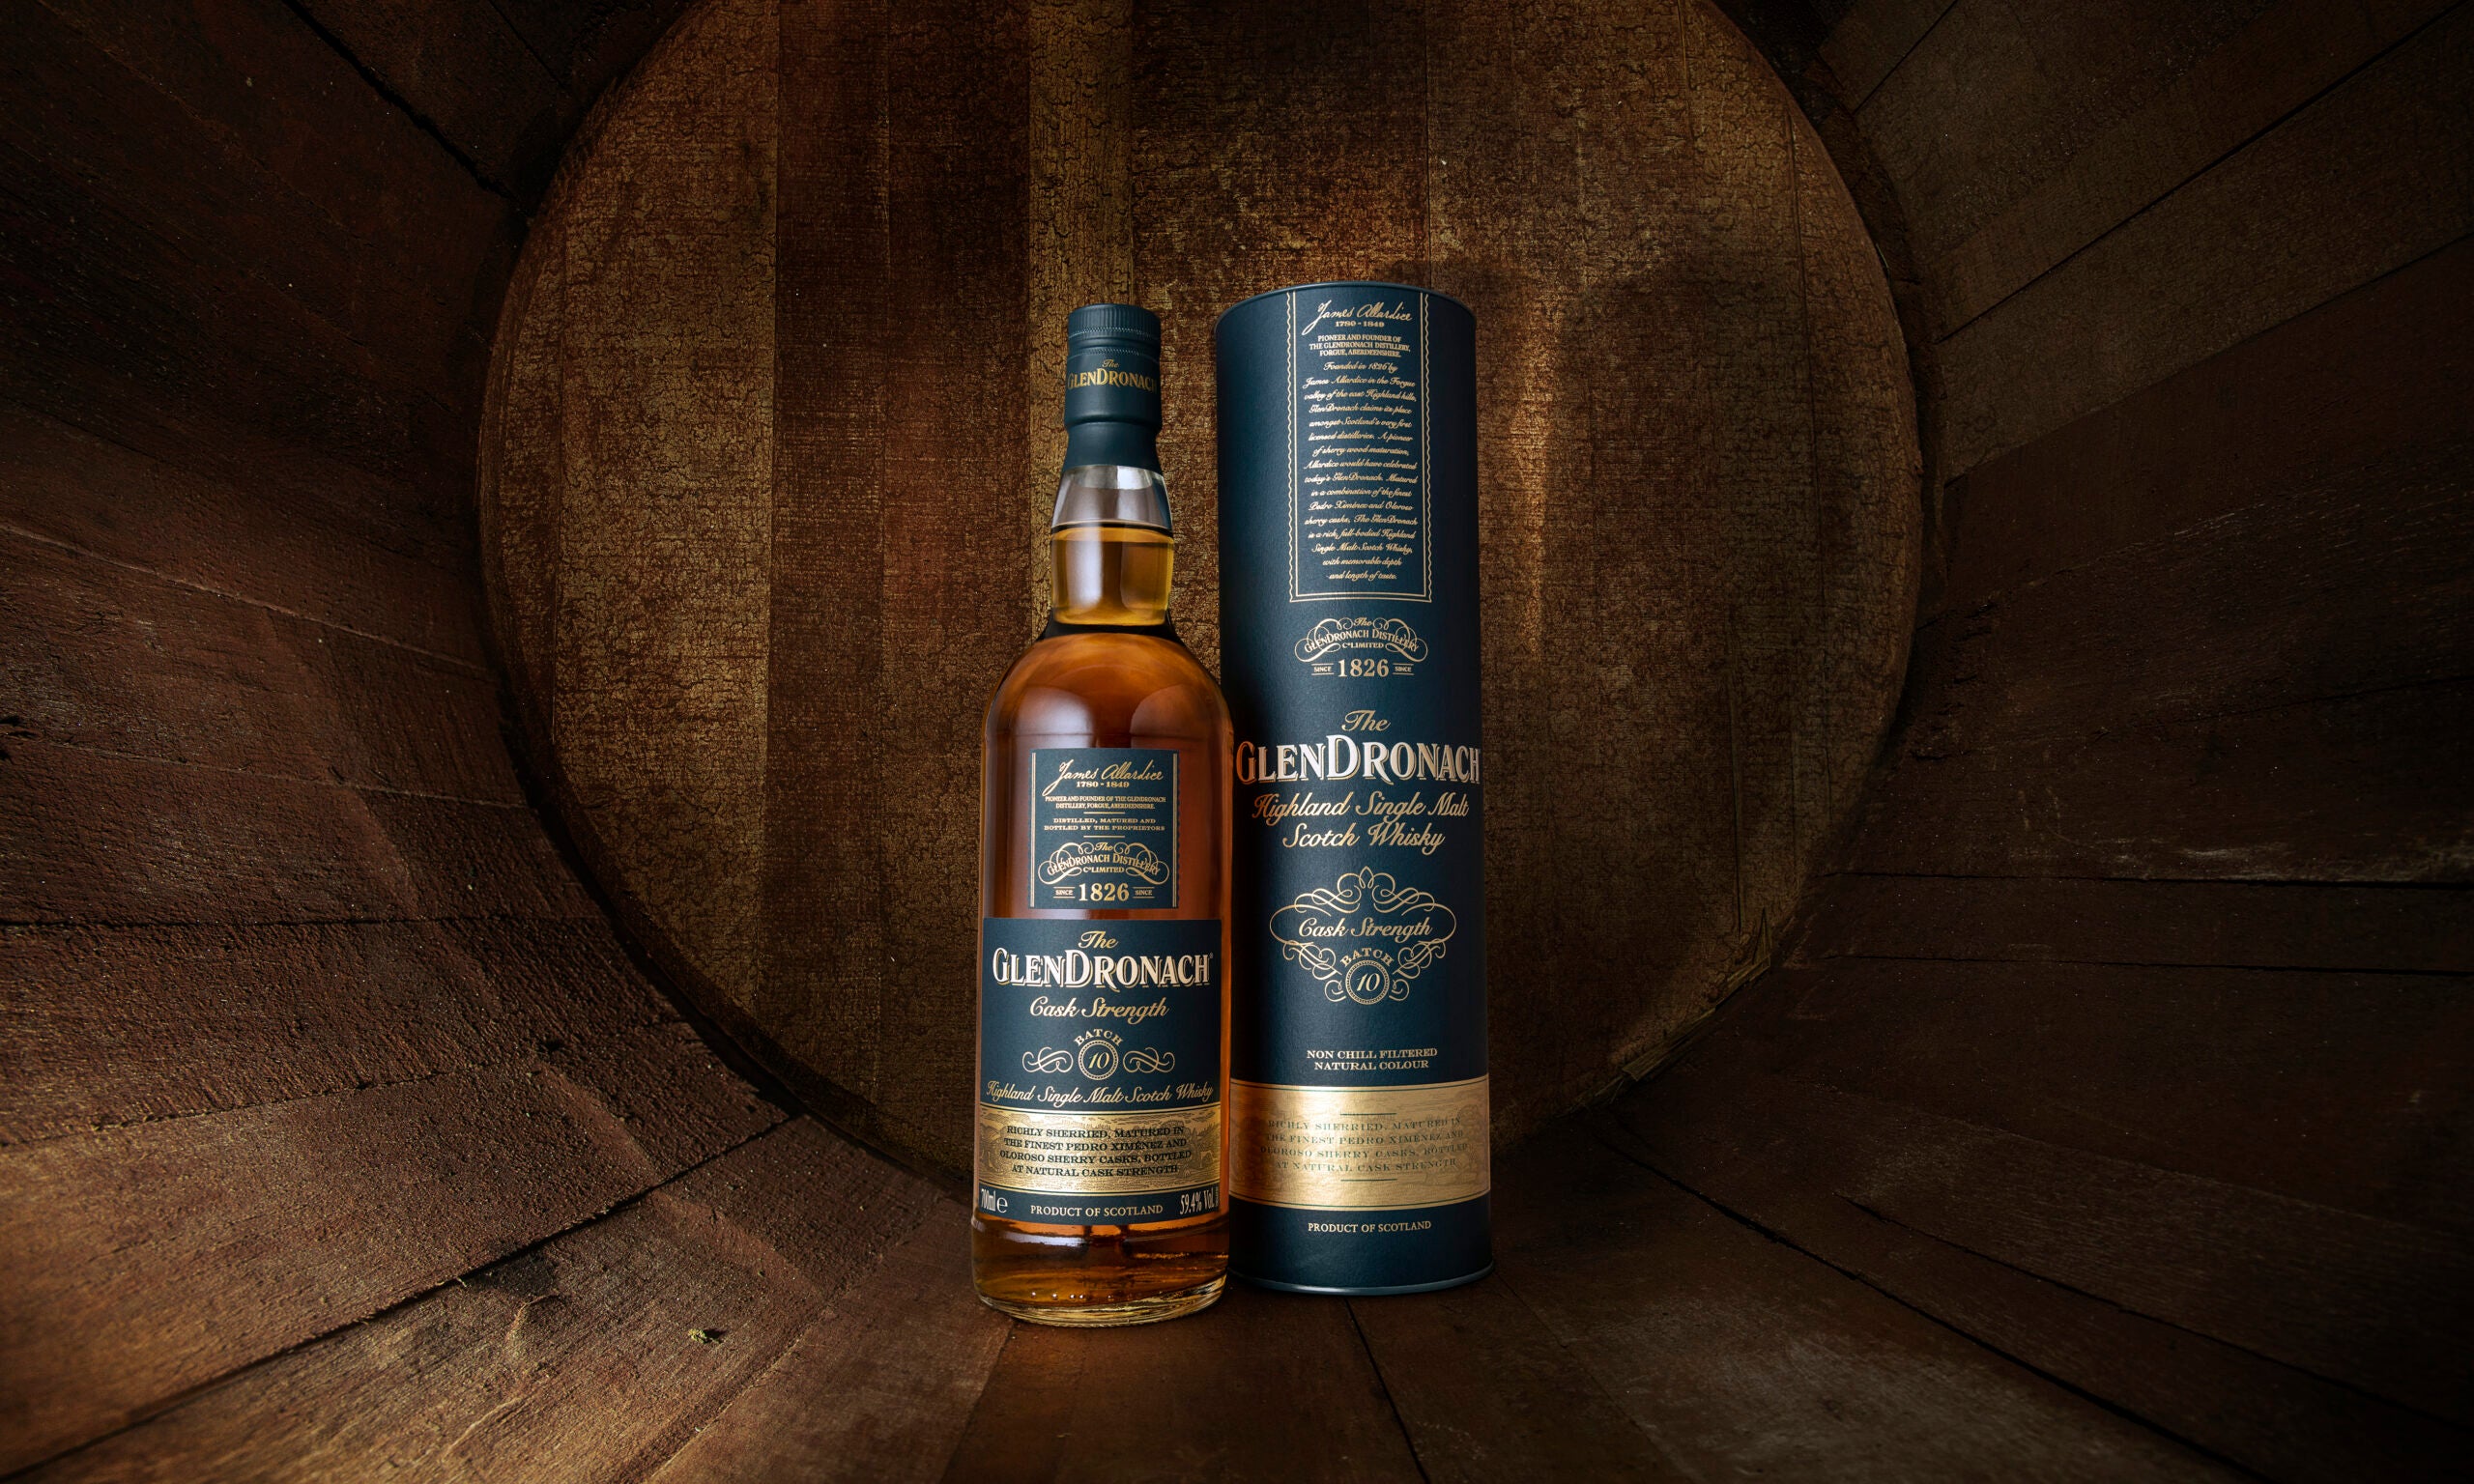 The GlenDronach Cask Strength – Glendronach Distillery